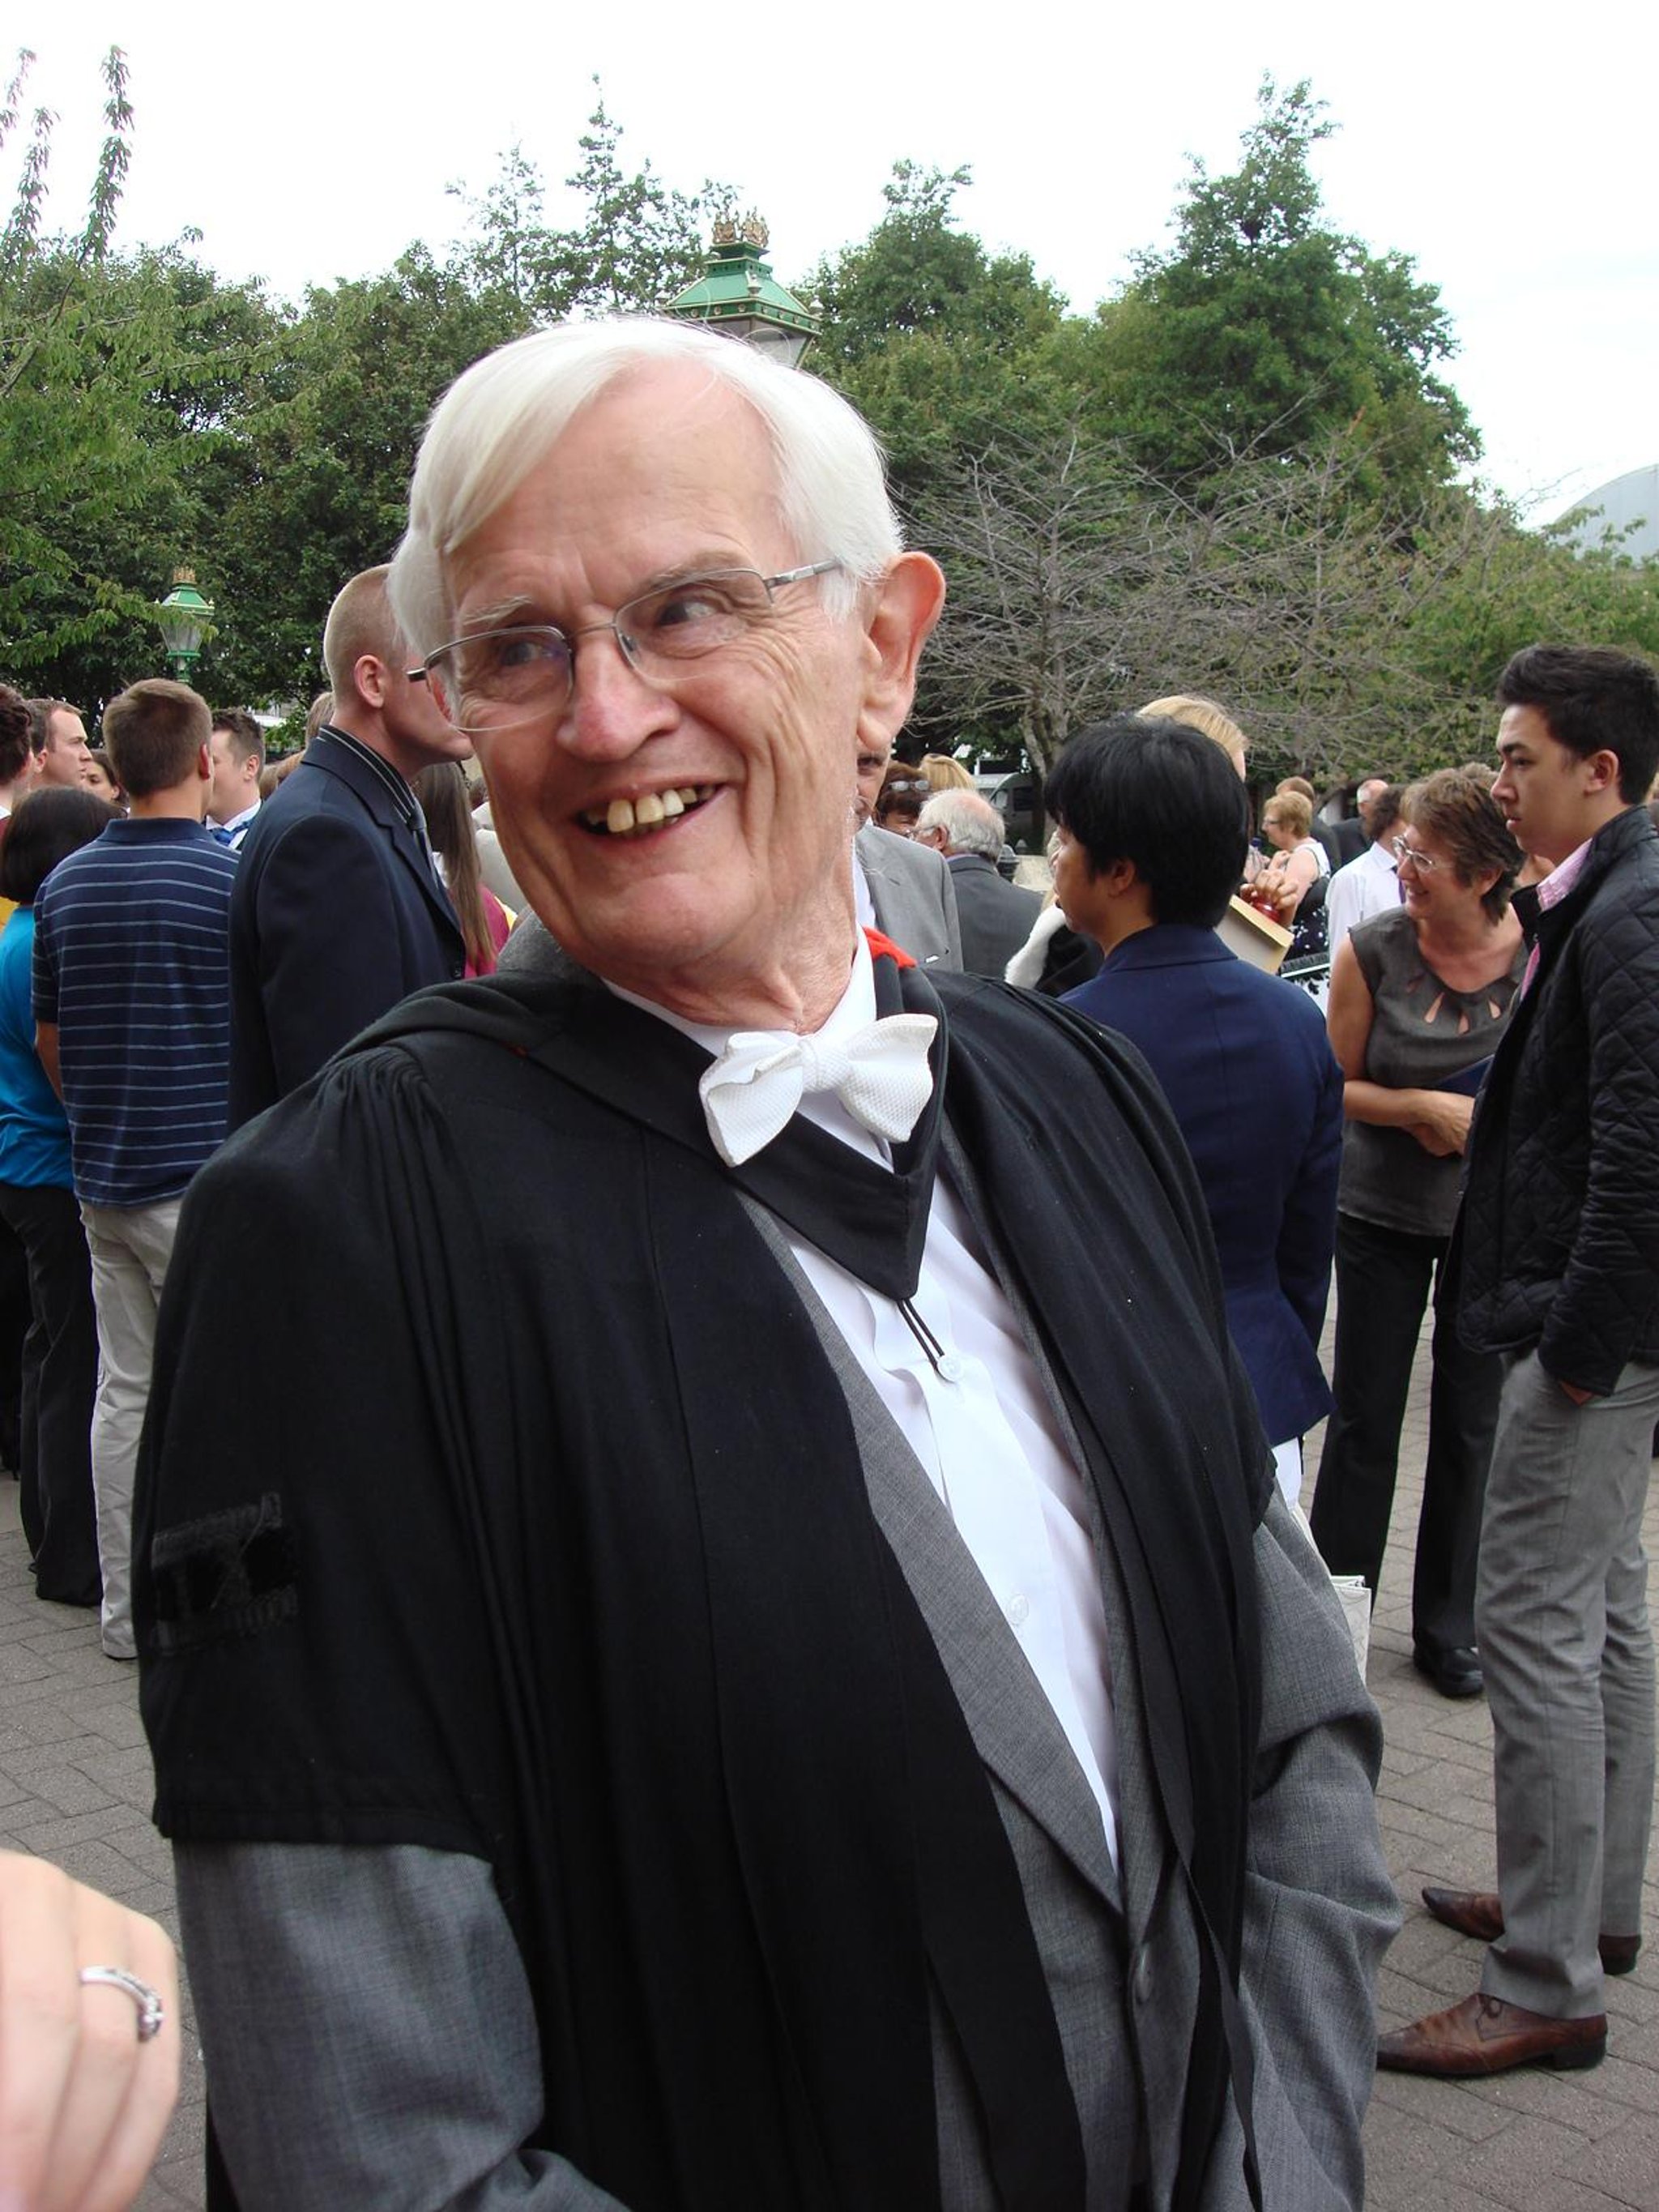 Obituaries: Prof Morley Sewell, former Dean of Royal (Dick) School of Veterinary Medicine